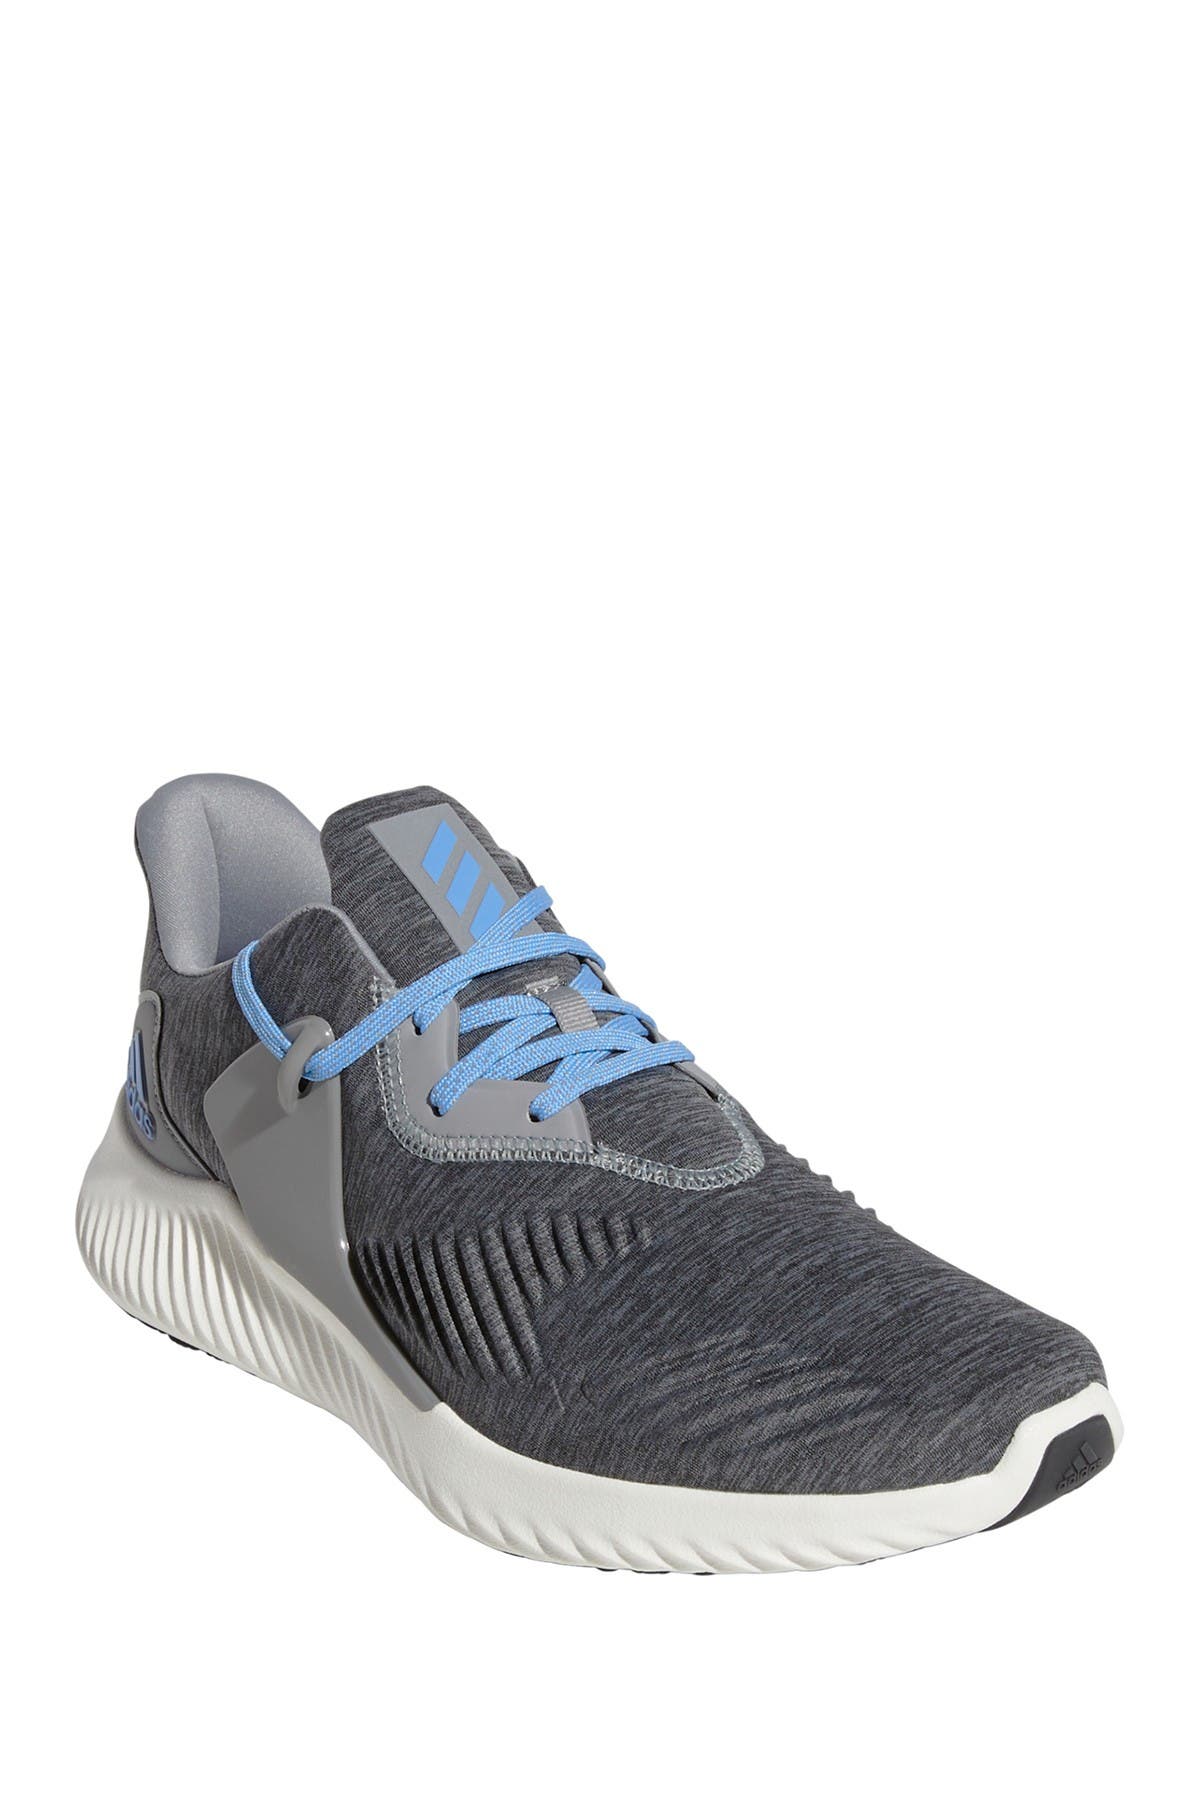 adidas | Alphabounce RC 2 Running Shoe 